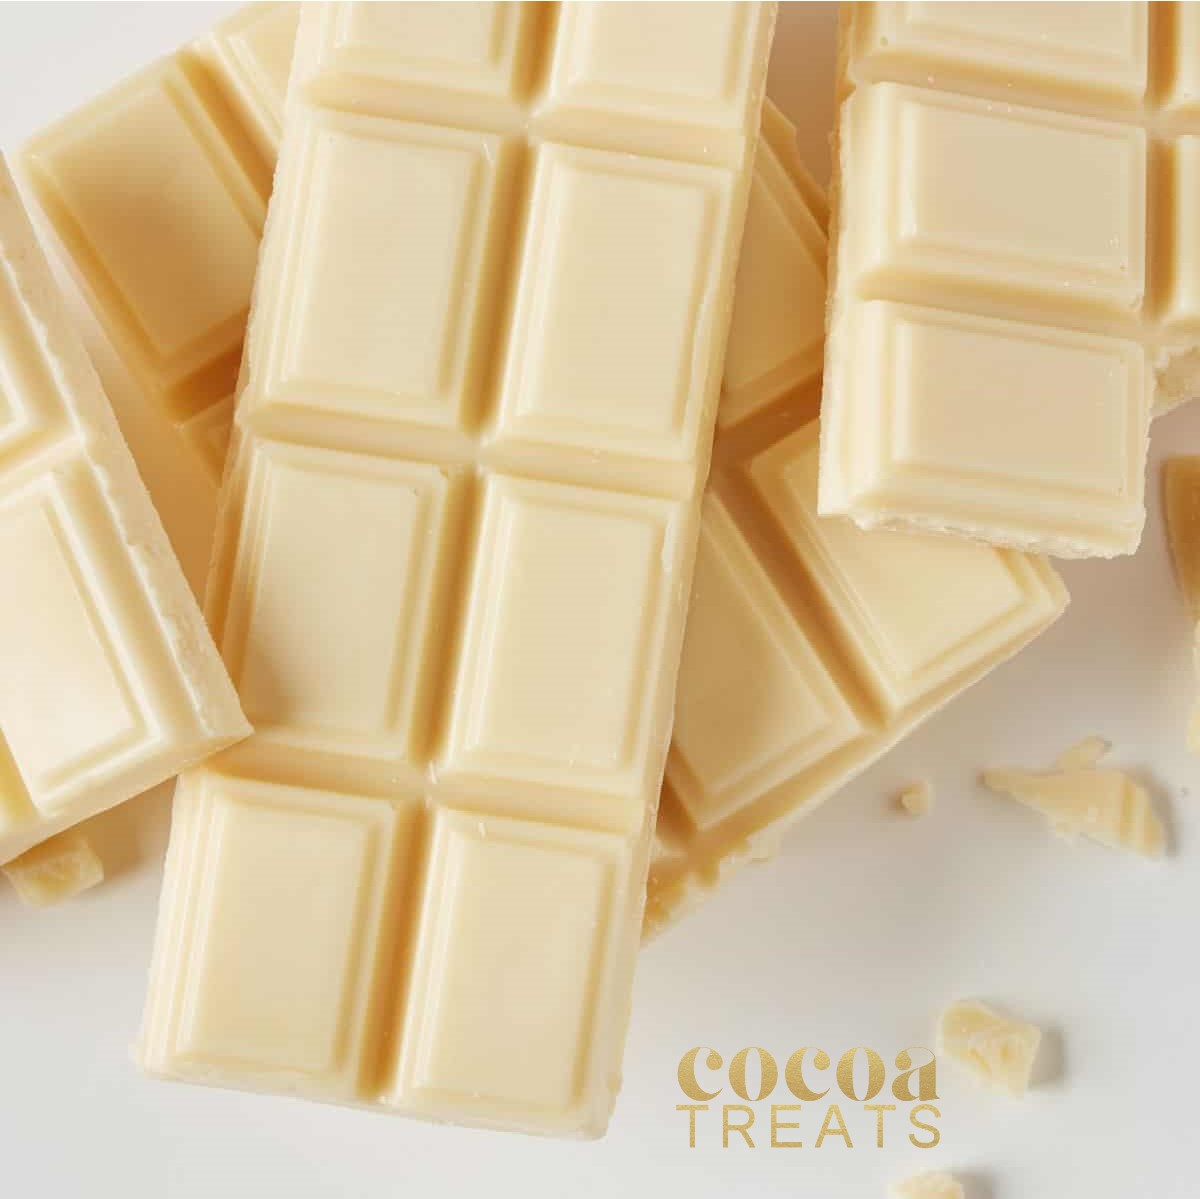 Cocoa Treats Belgian White Chocolate 100g